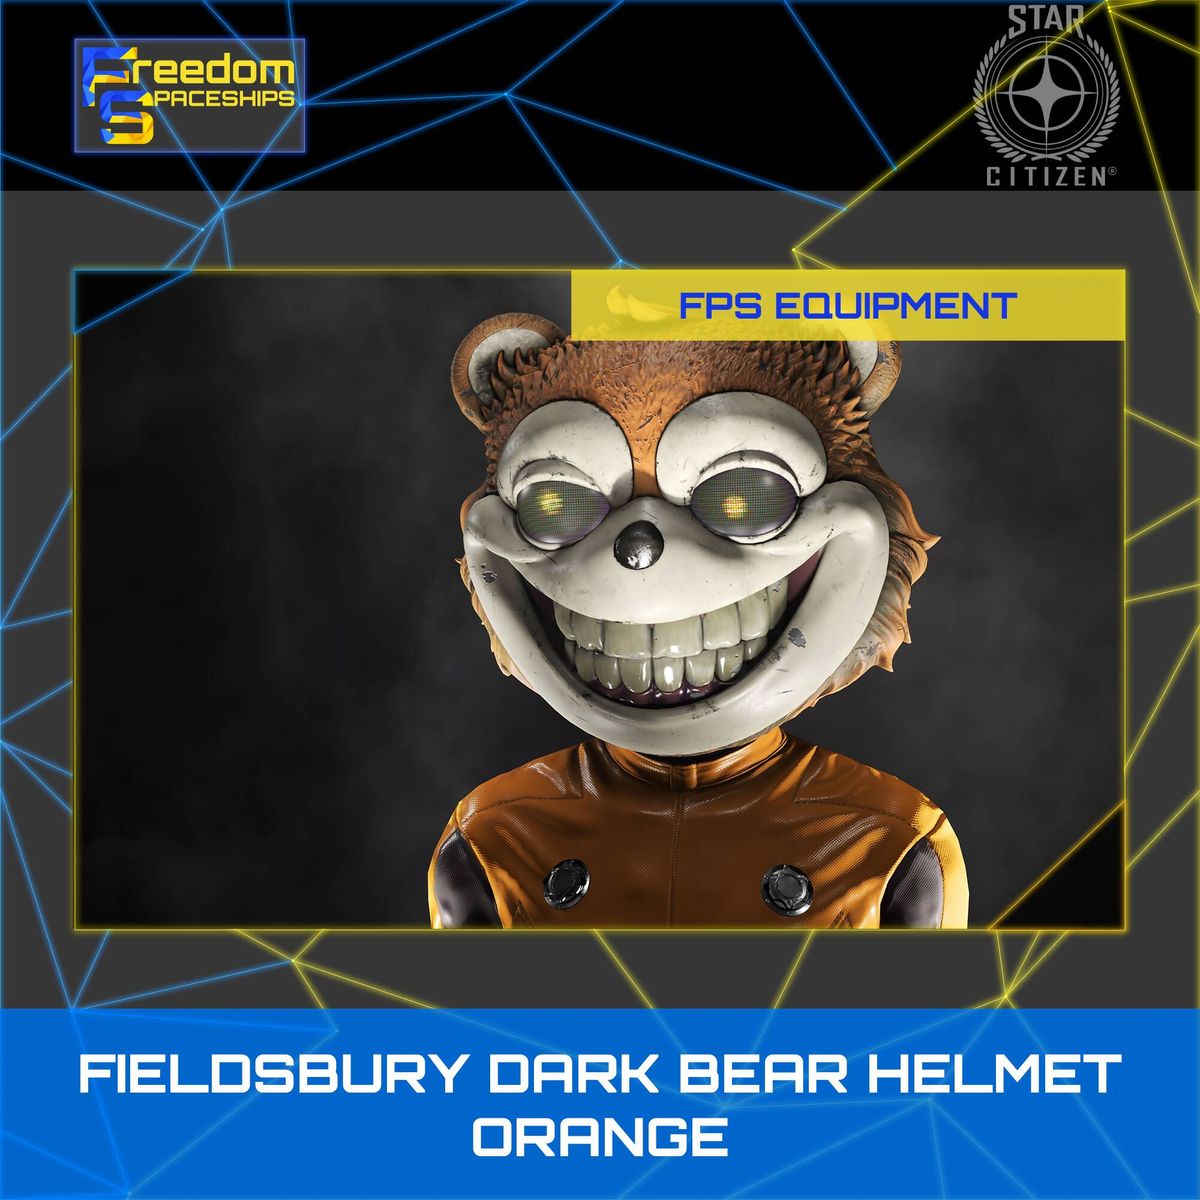 Gear - Fieldsbury Dark Bear Helmet – Orange